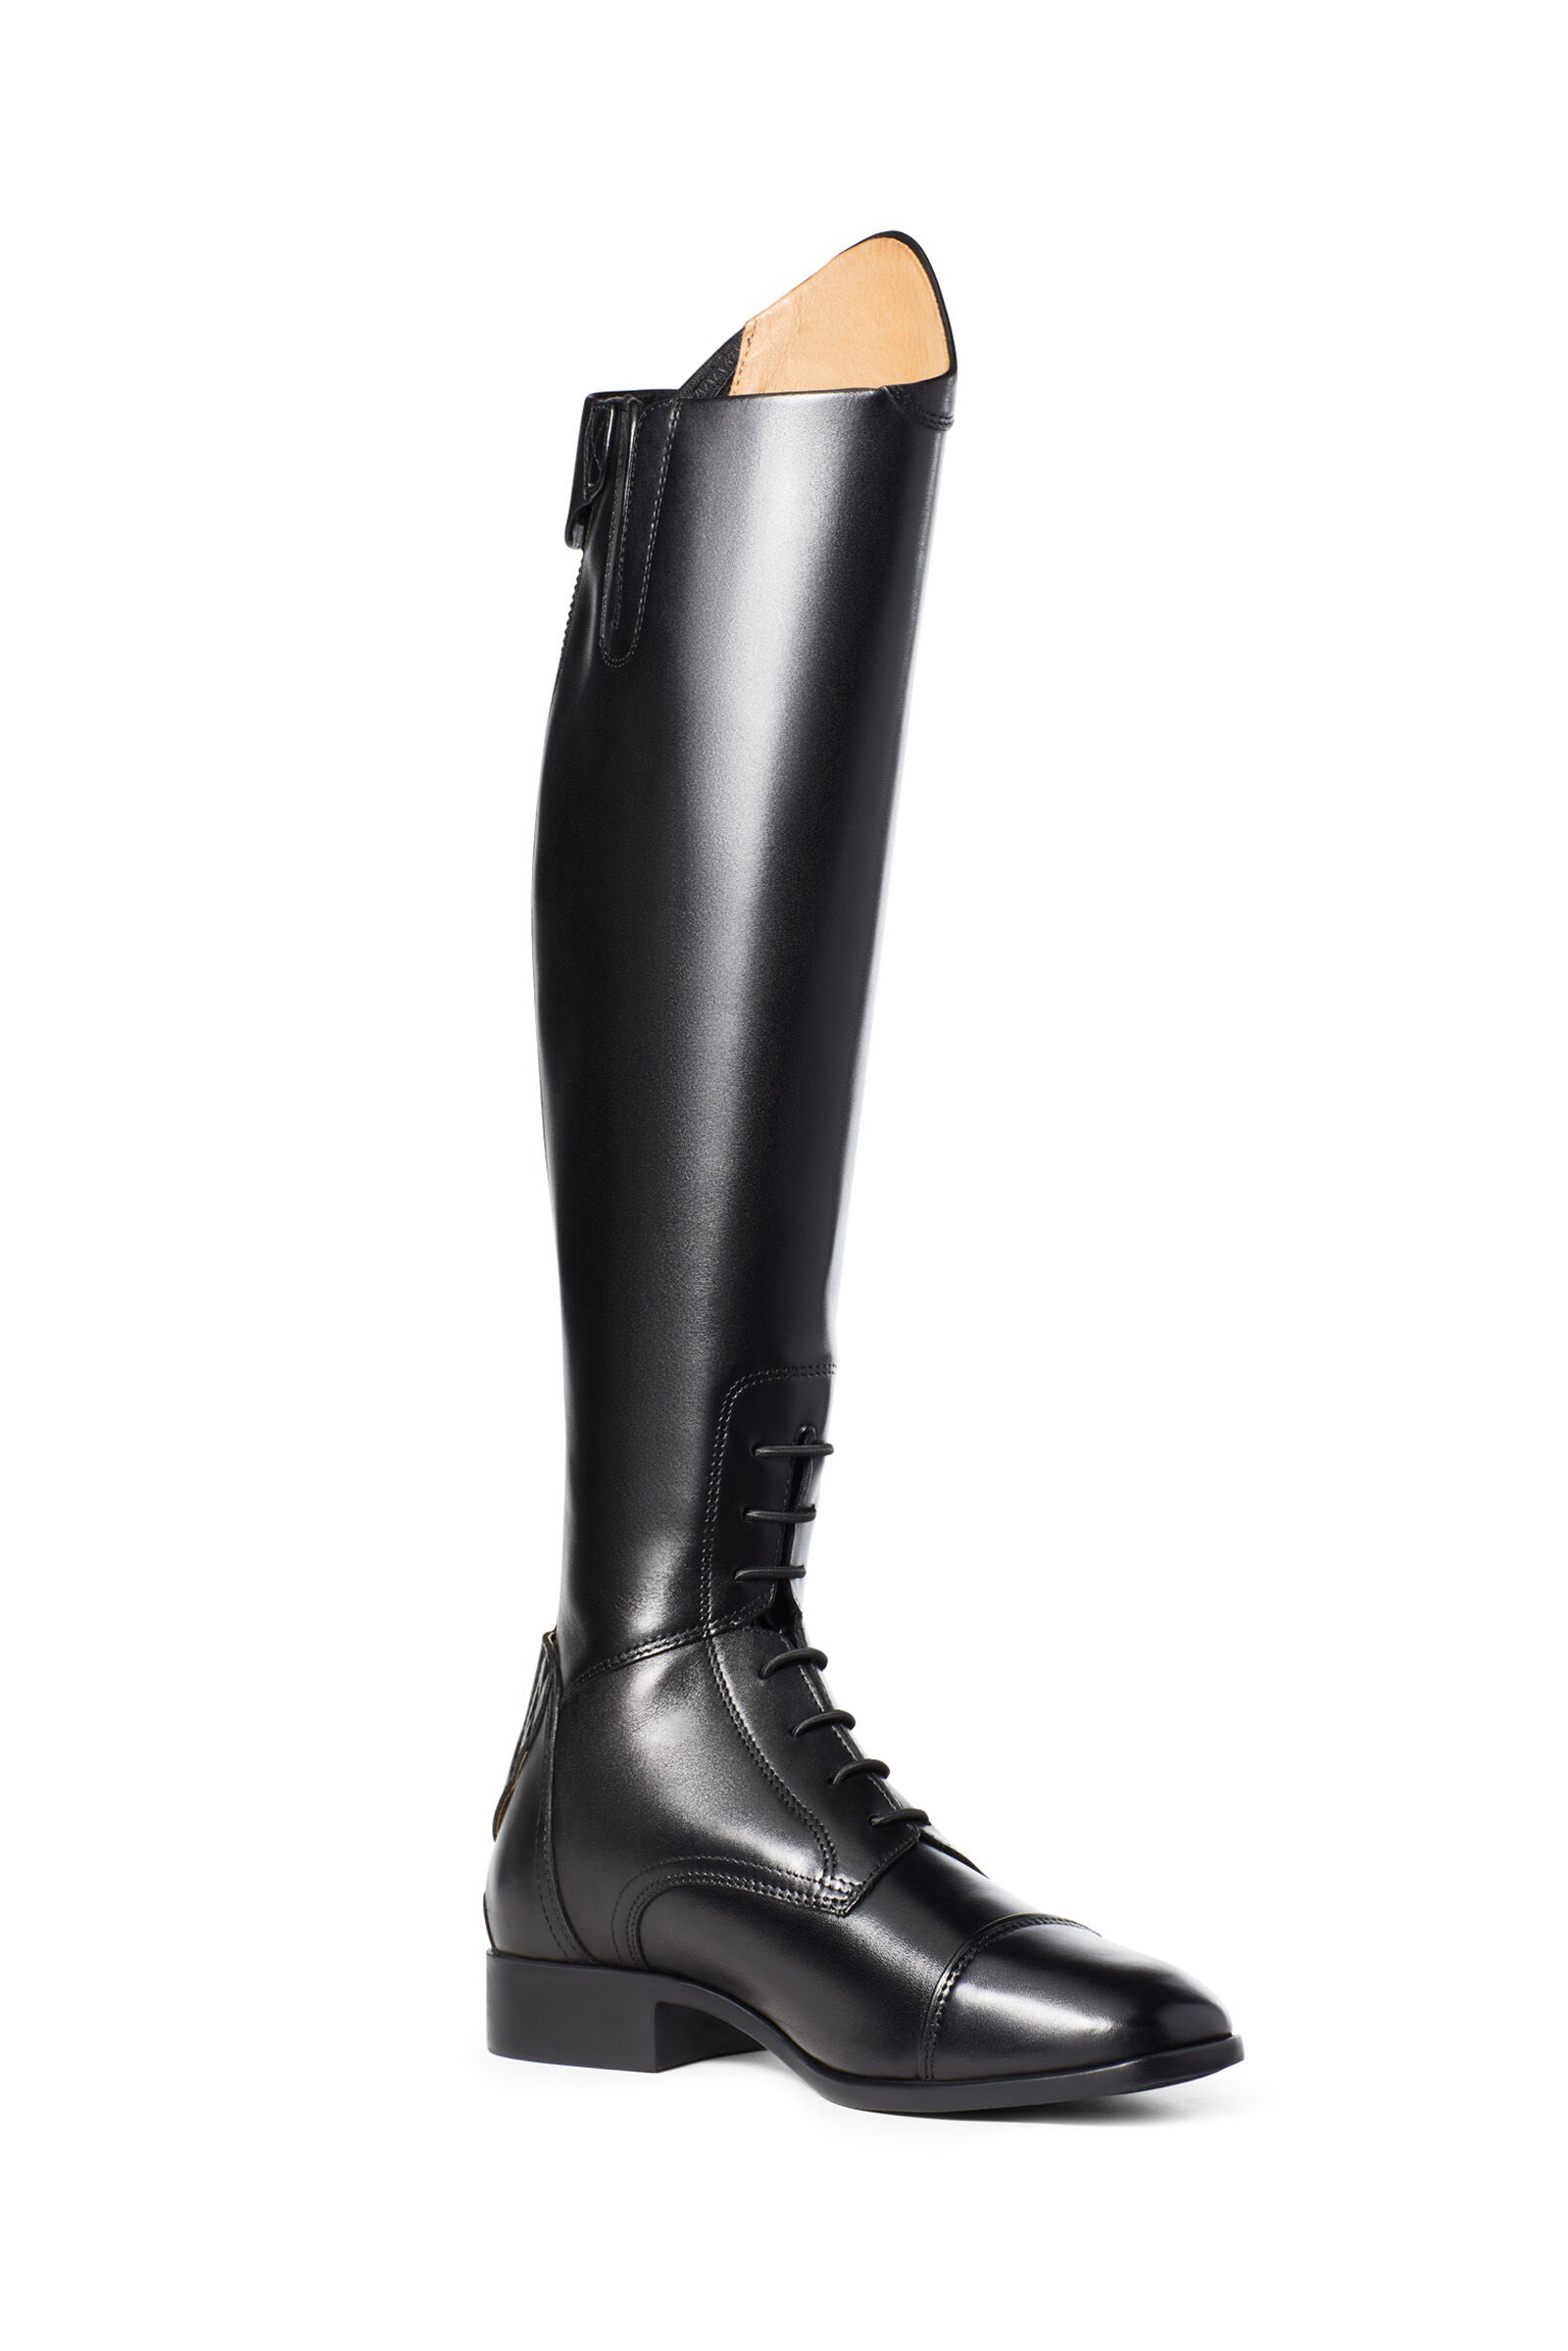 Buy Ariat Palisade Women's Tall Riding Boots | horze.eu